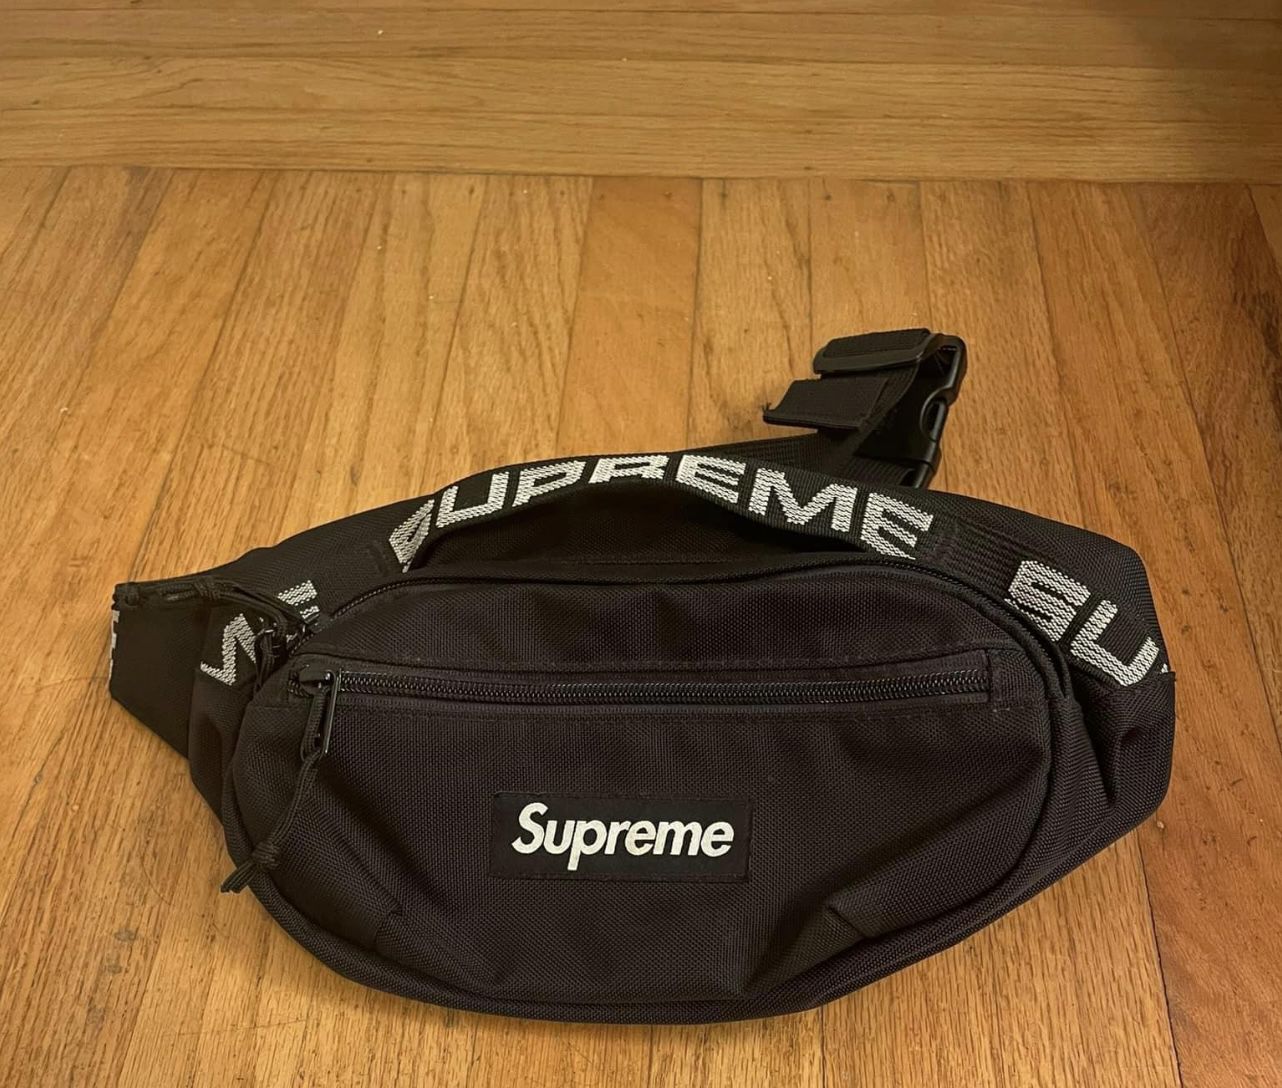 Supreme Waist Bag for Sale in Monterey Park, CA - OfferUp